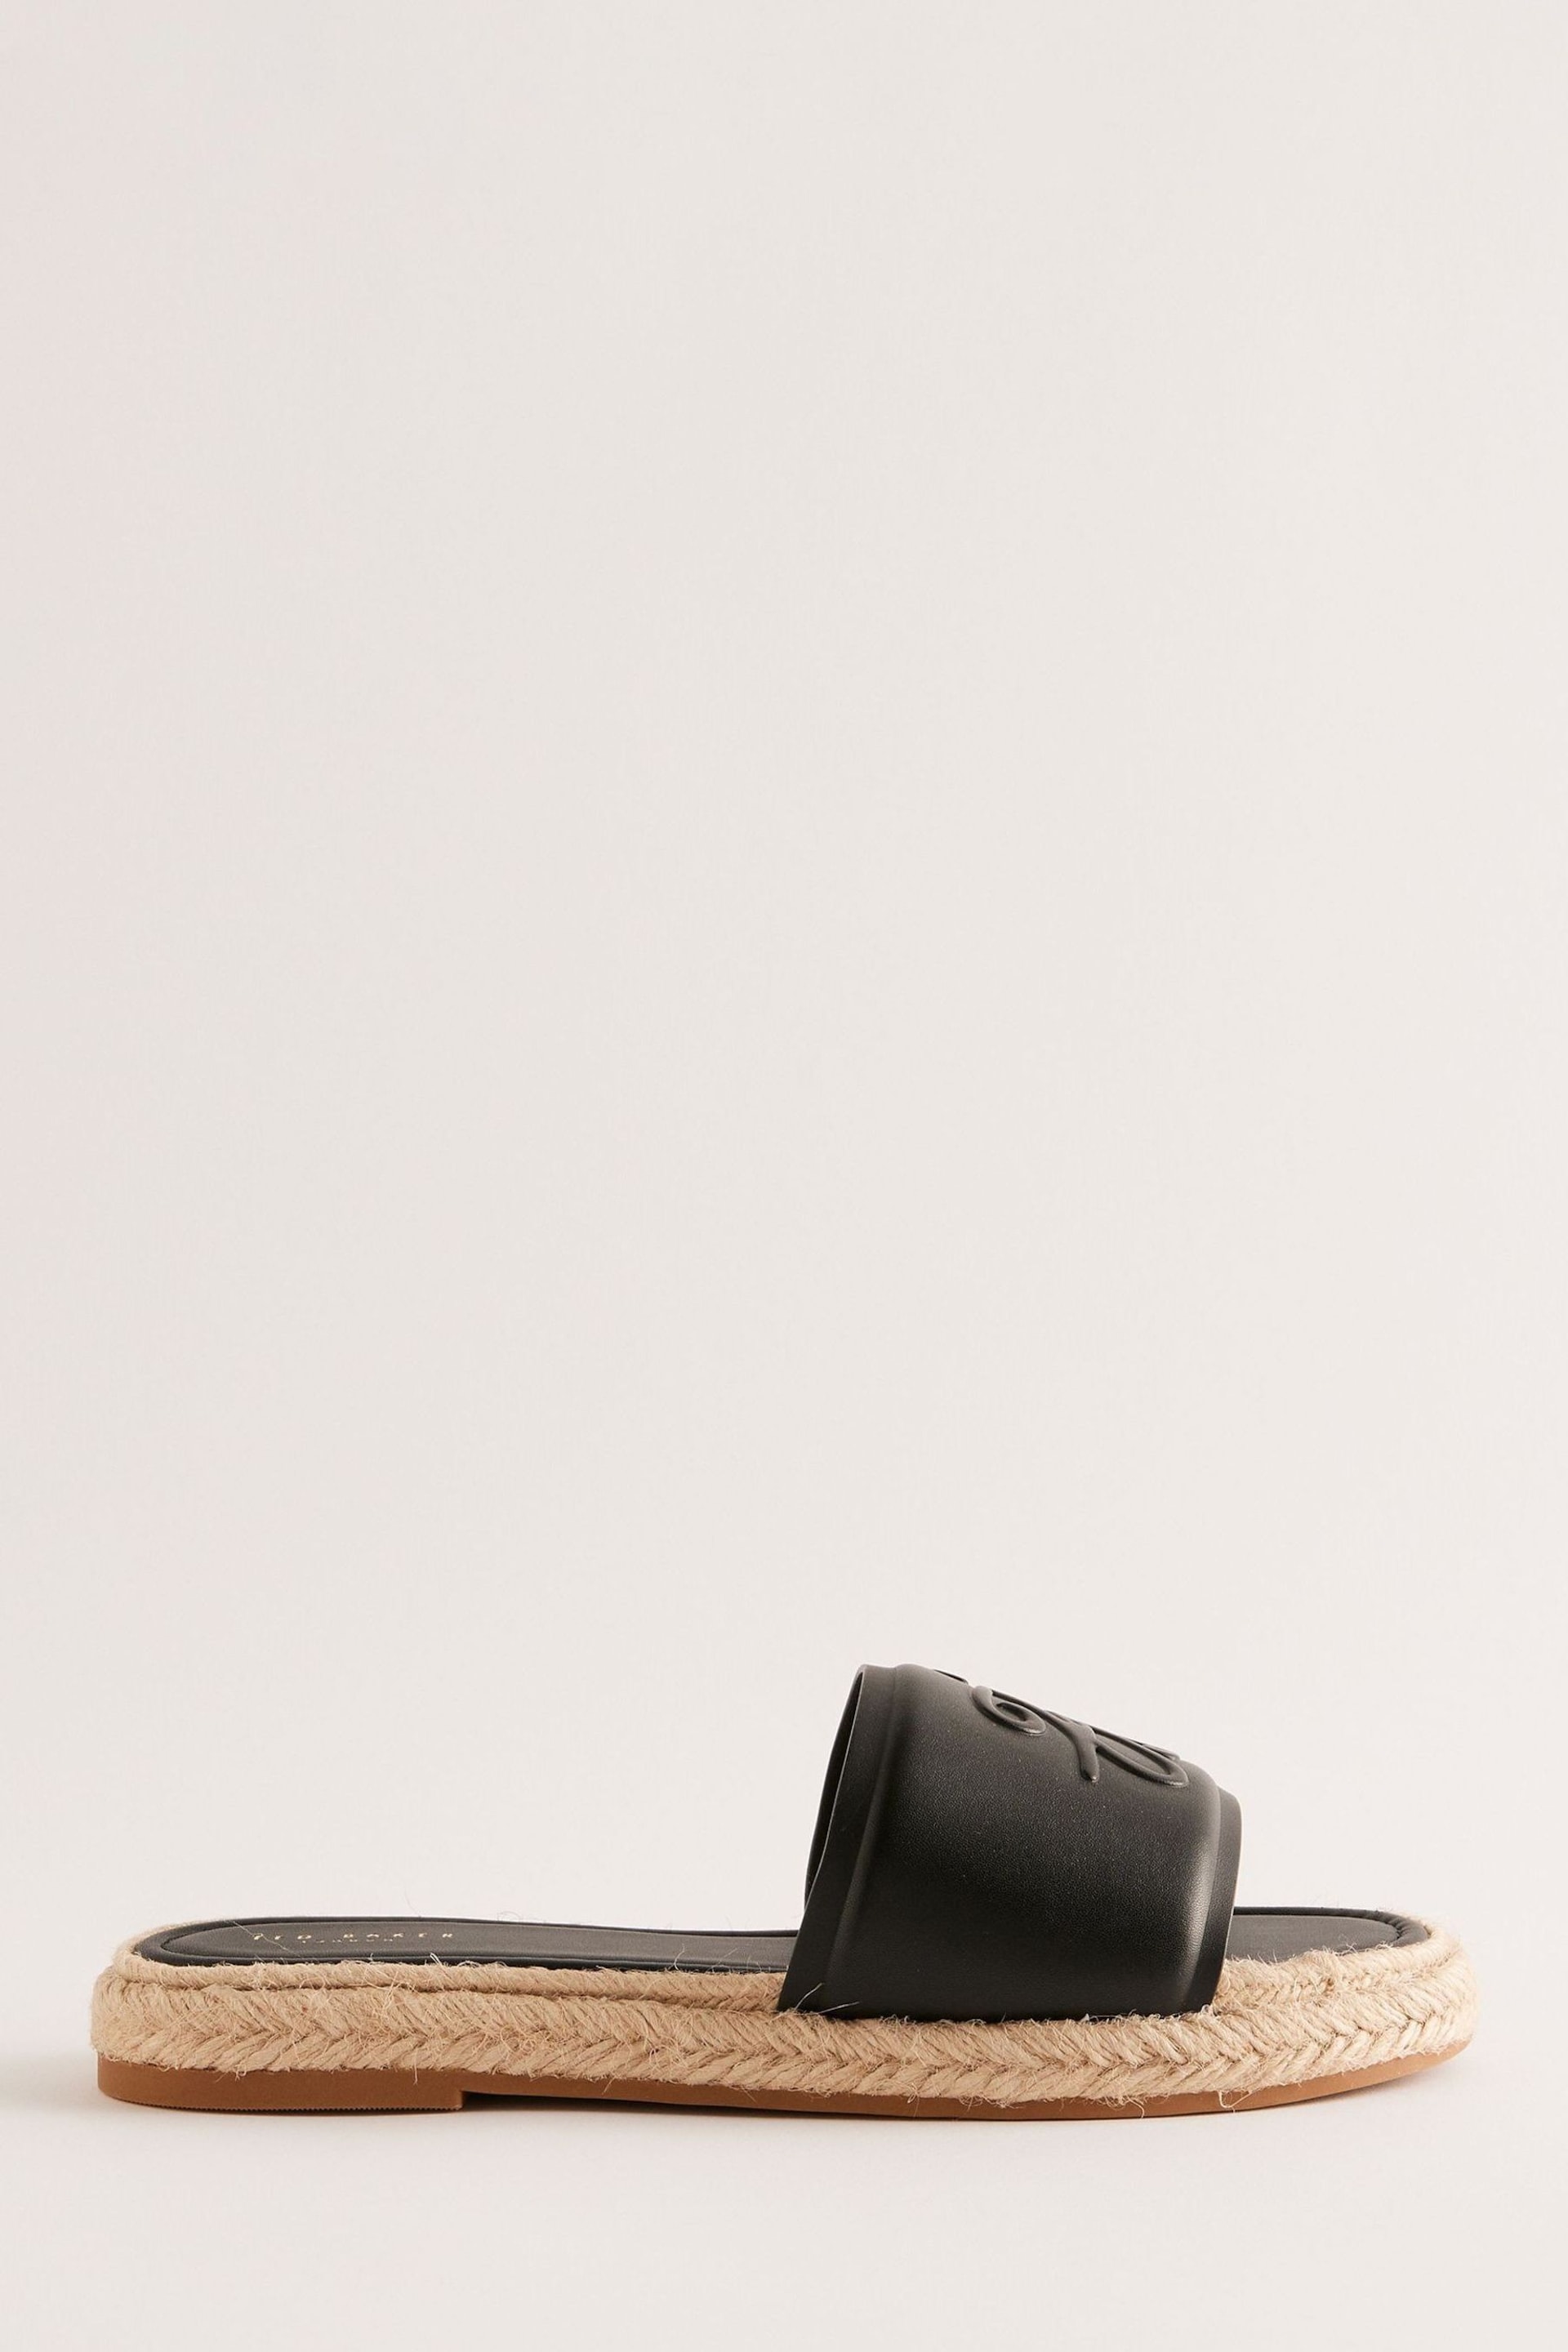 Ted Baker Black Portiya Flat Espadrilles Sandals With Signature Logo - Image 1 of 5